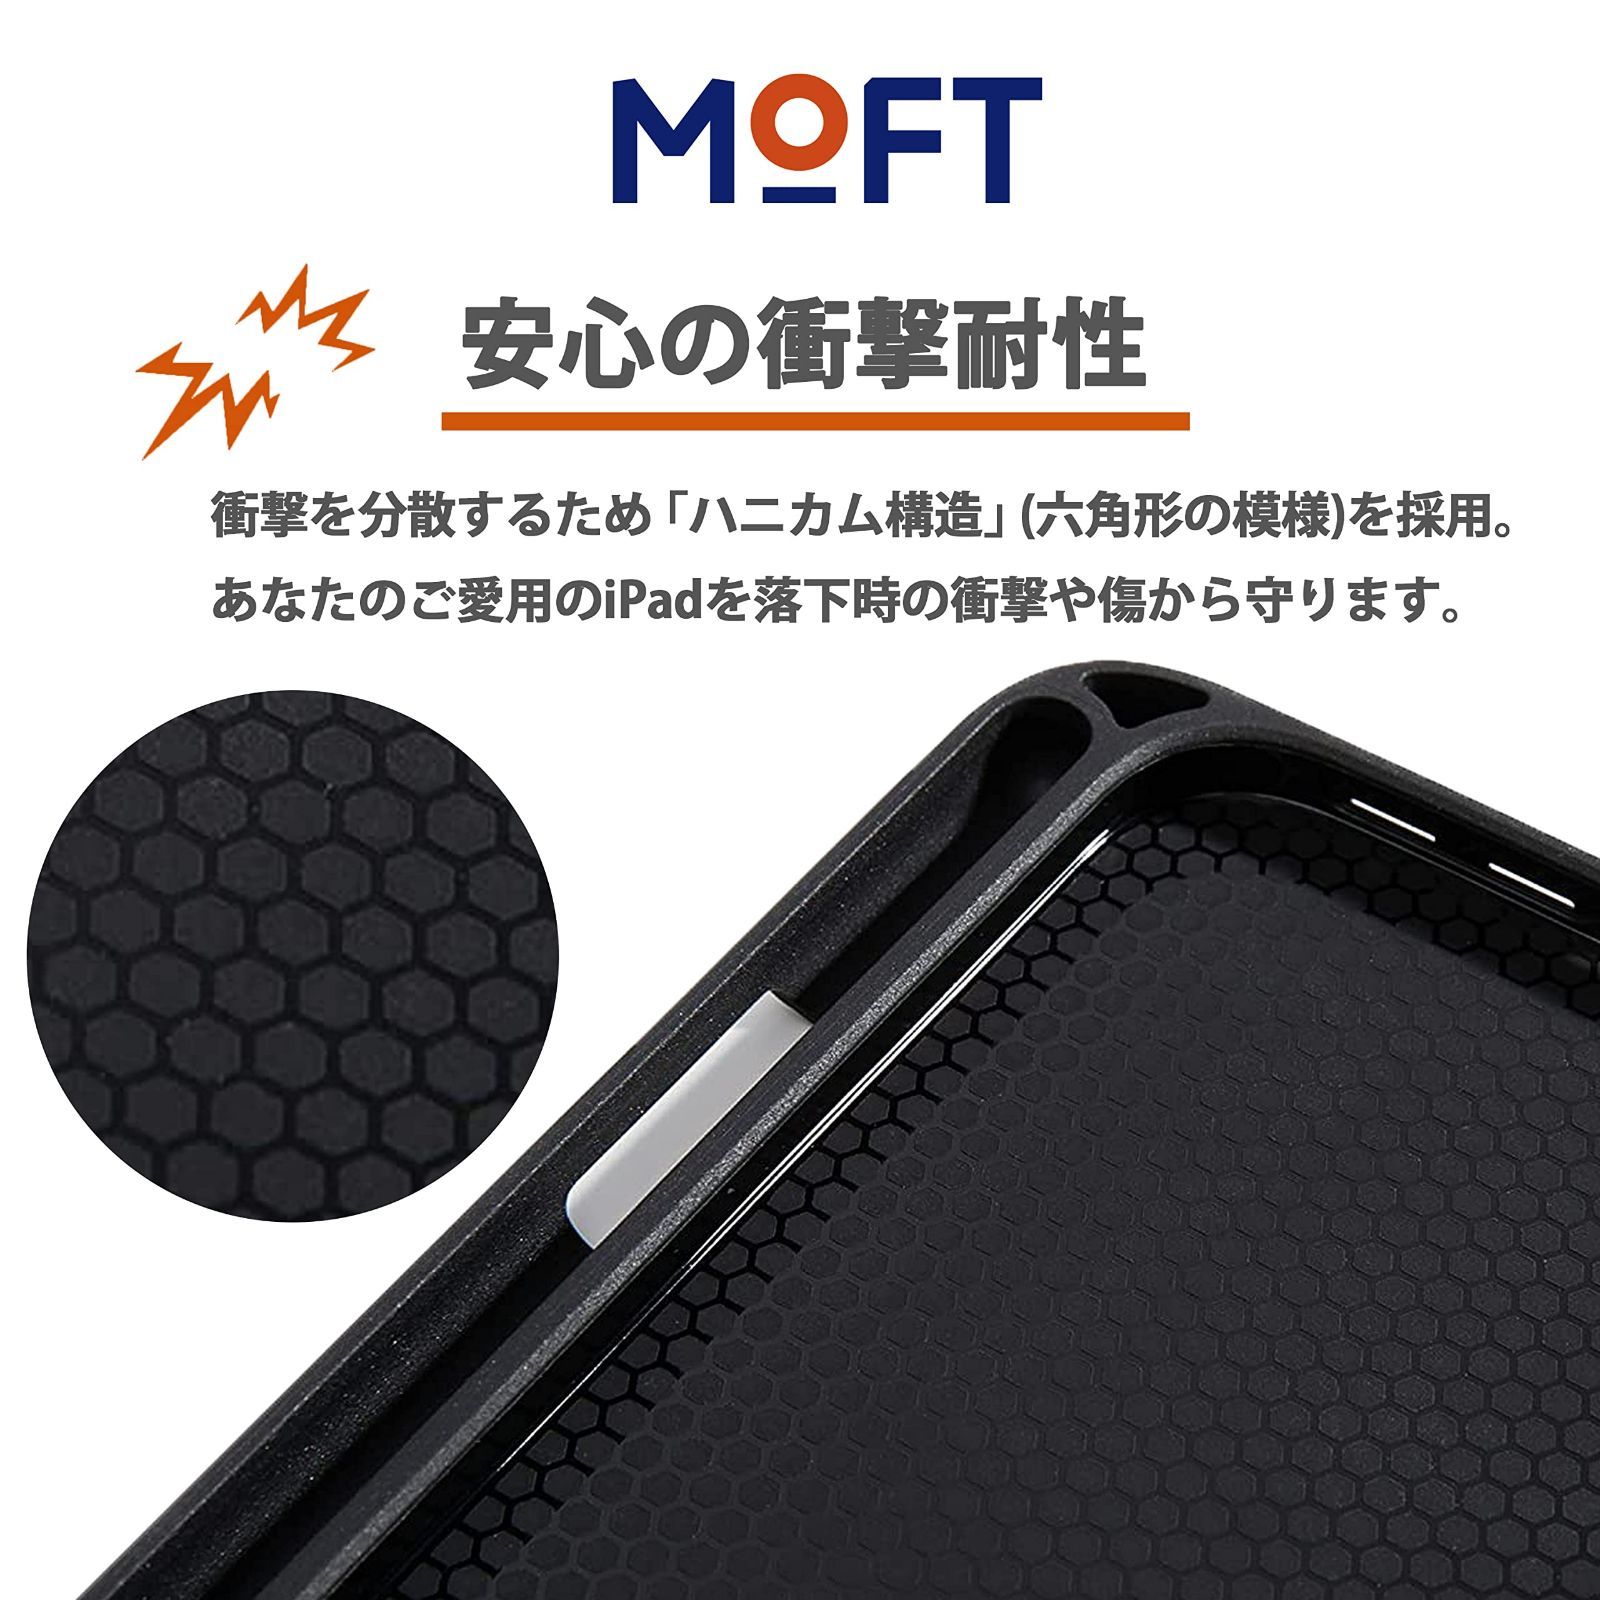 MOFT iPad mini Snapケーススタンドセット 通販